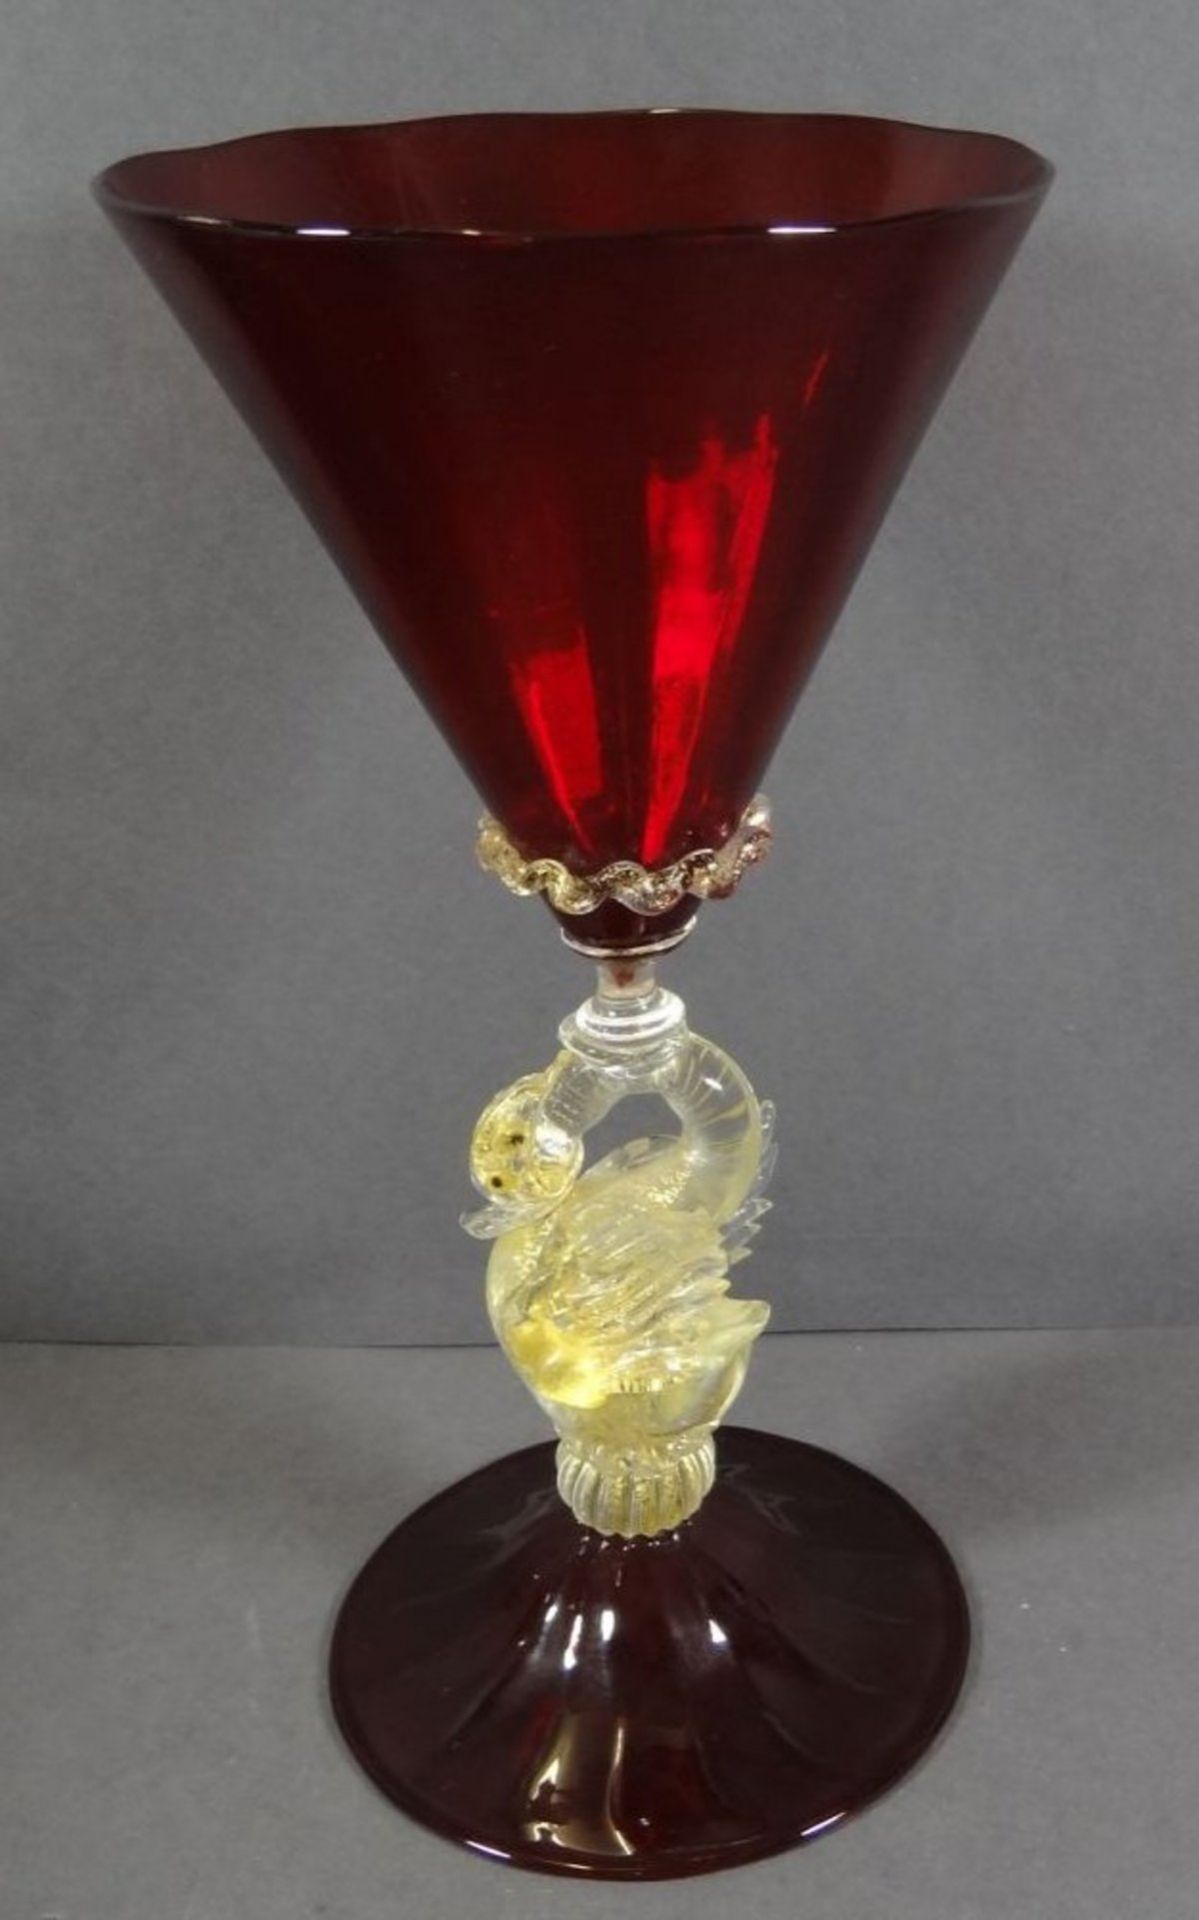 gr. Pokal "Murano" rotes Glas, Griff als Schwan, klar mit Goldflitter, H-21 cm